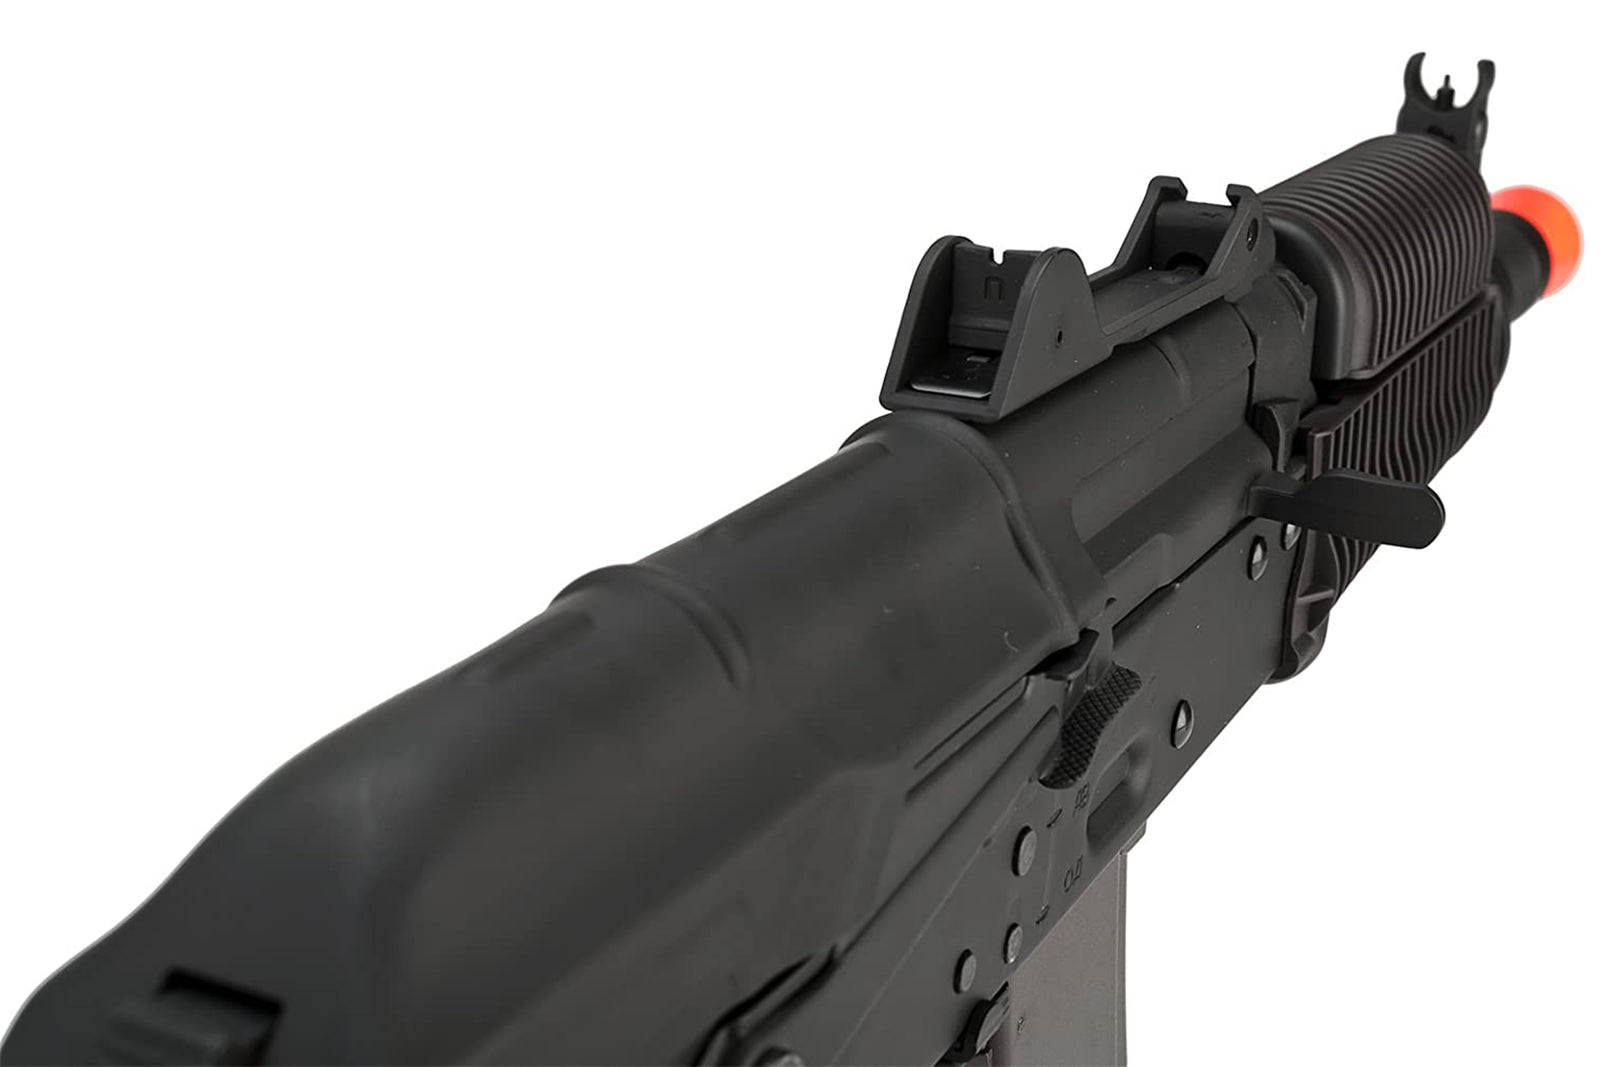 CYMA Standard Stamped Metal AK74U Airsoft AEG Rifle w/ Folding Stock and Polymer Furniture